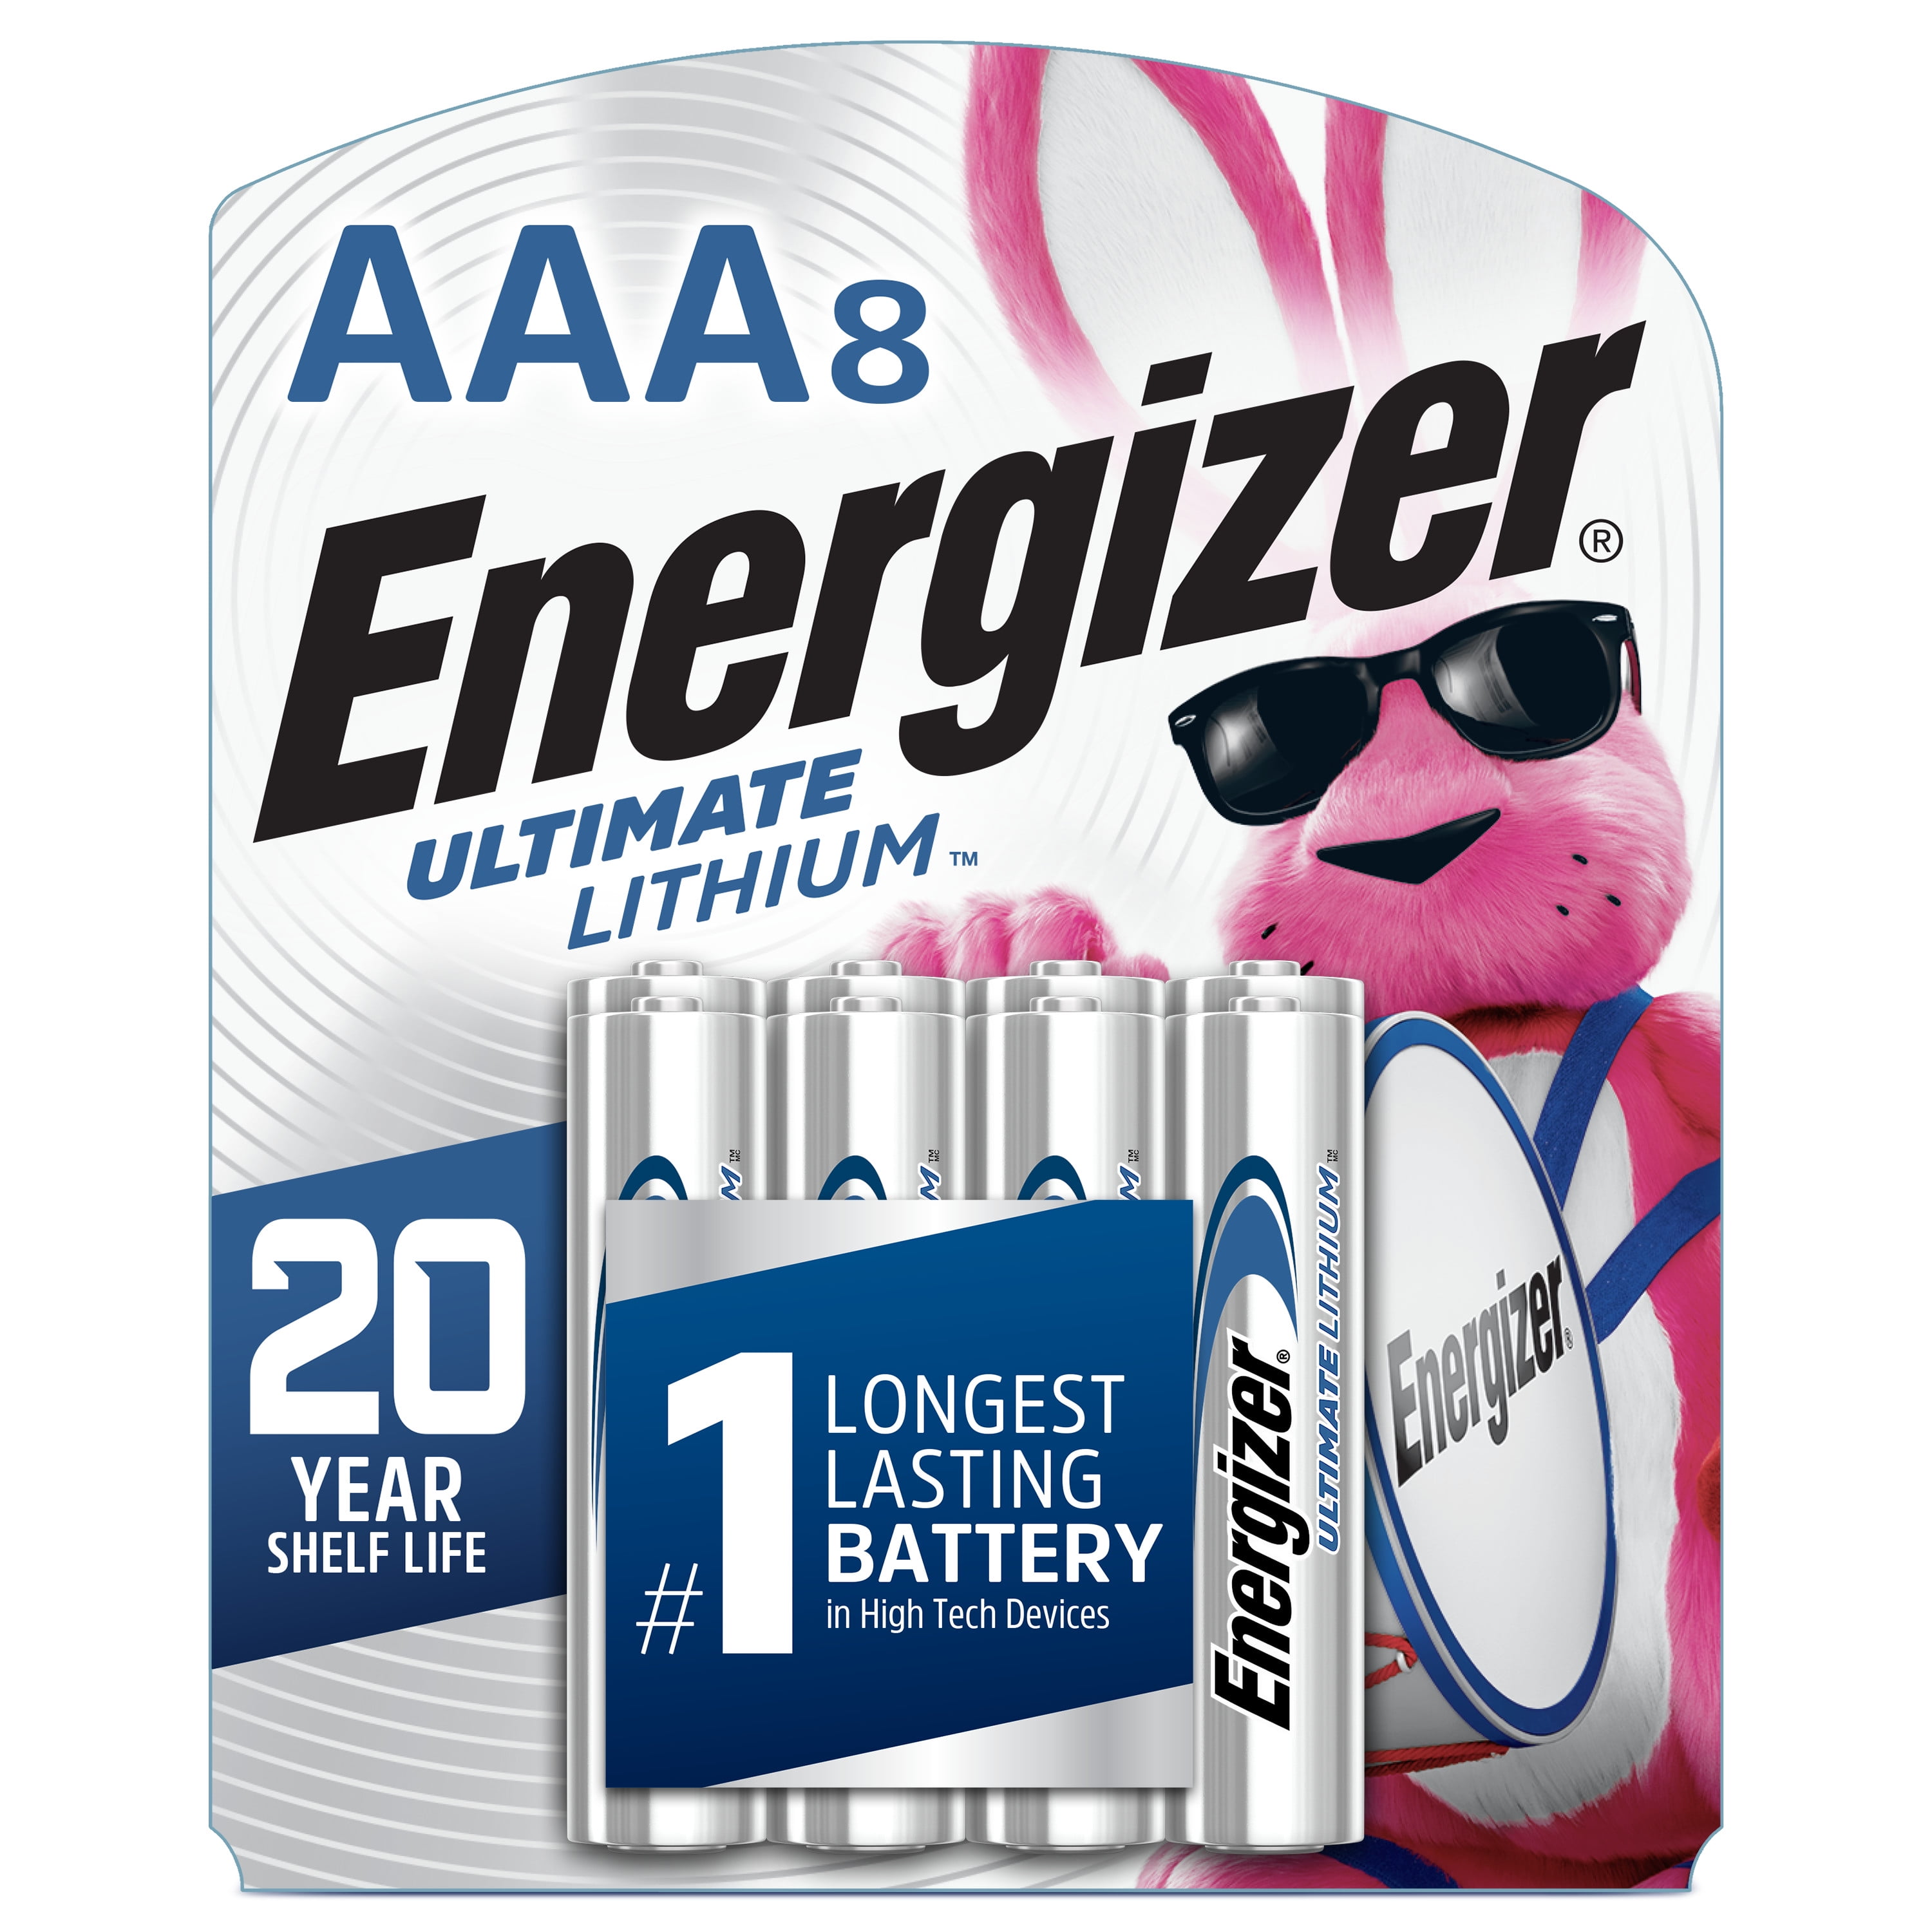 Energizer 8 batterie pile AAA  ministilo Litio Energizer Ultimate Lithium 1,5V 